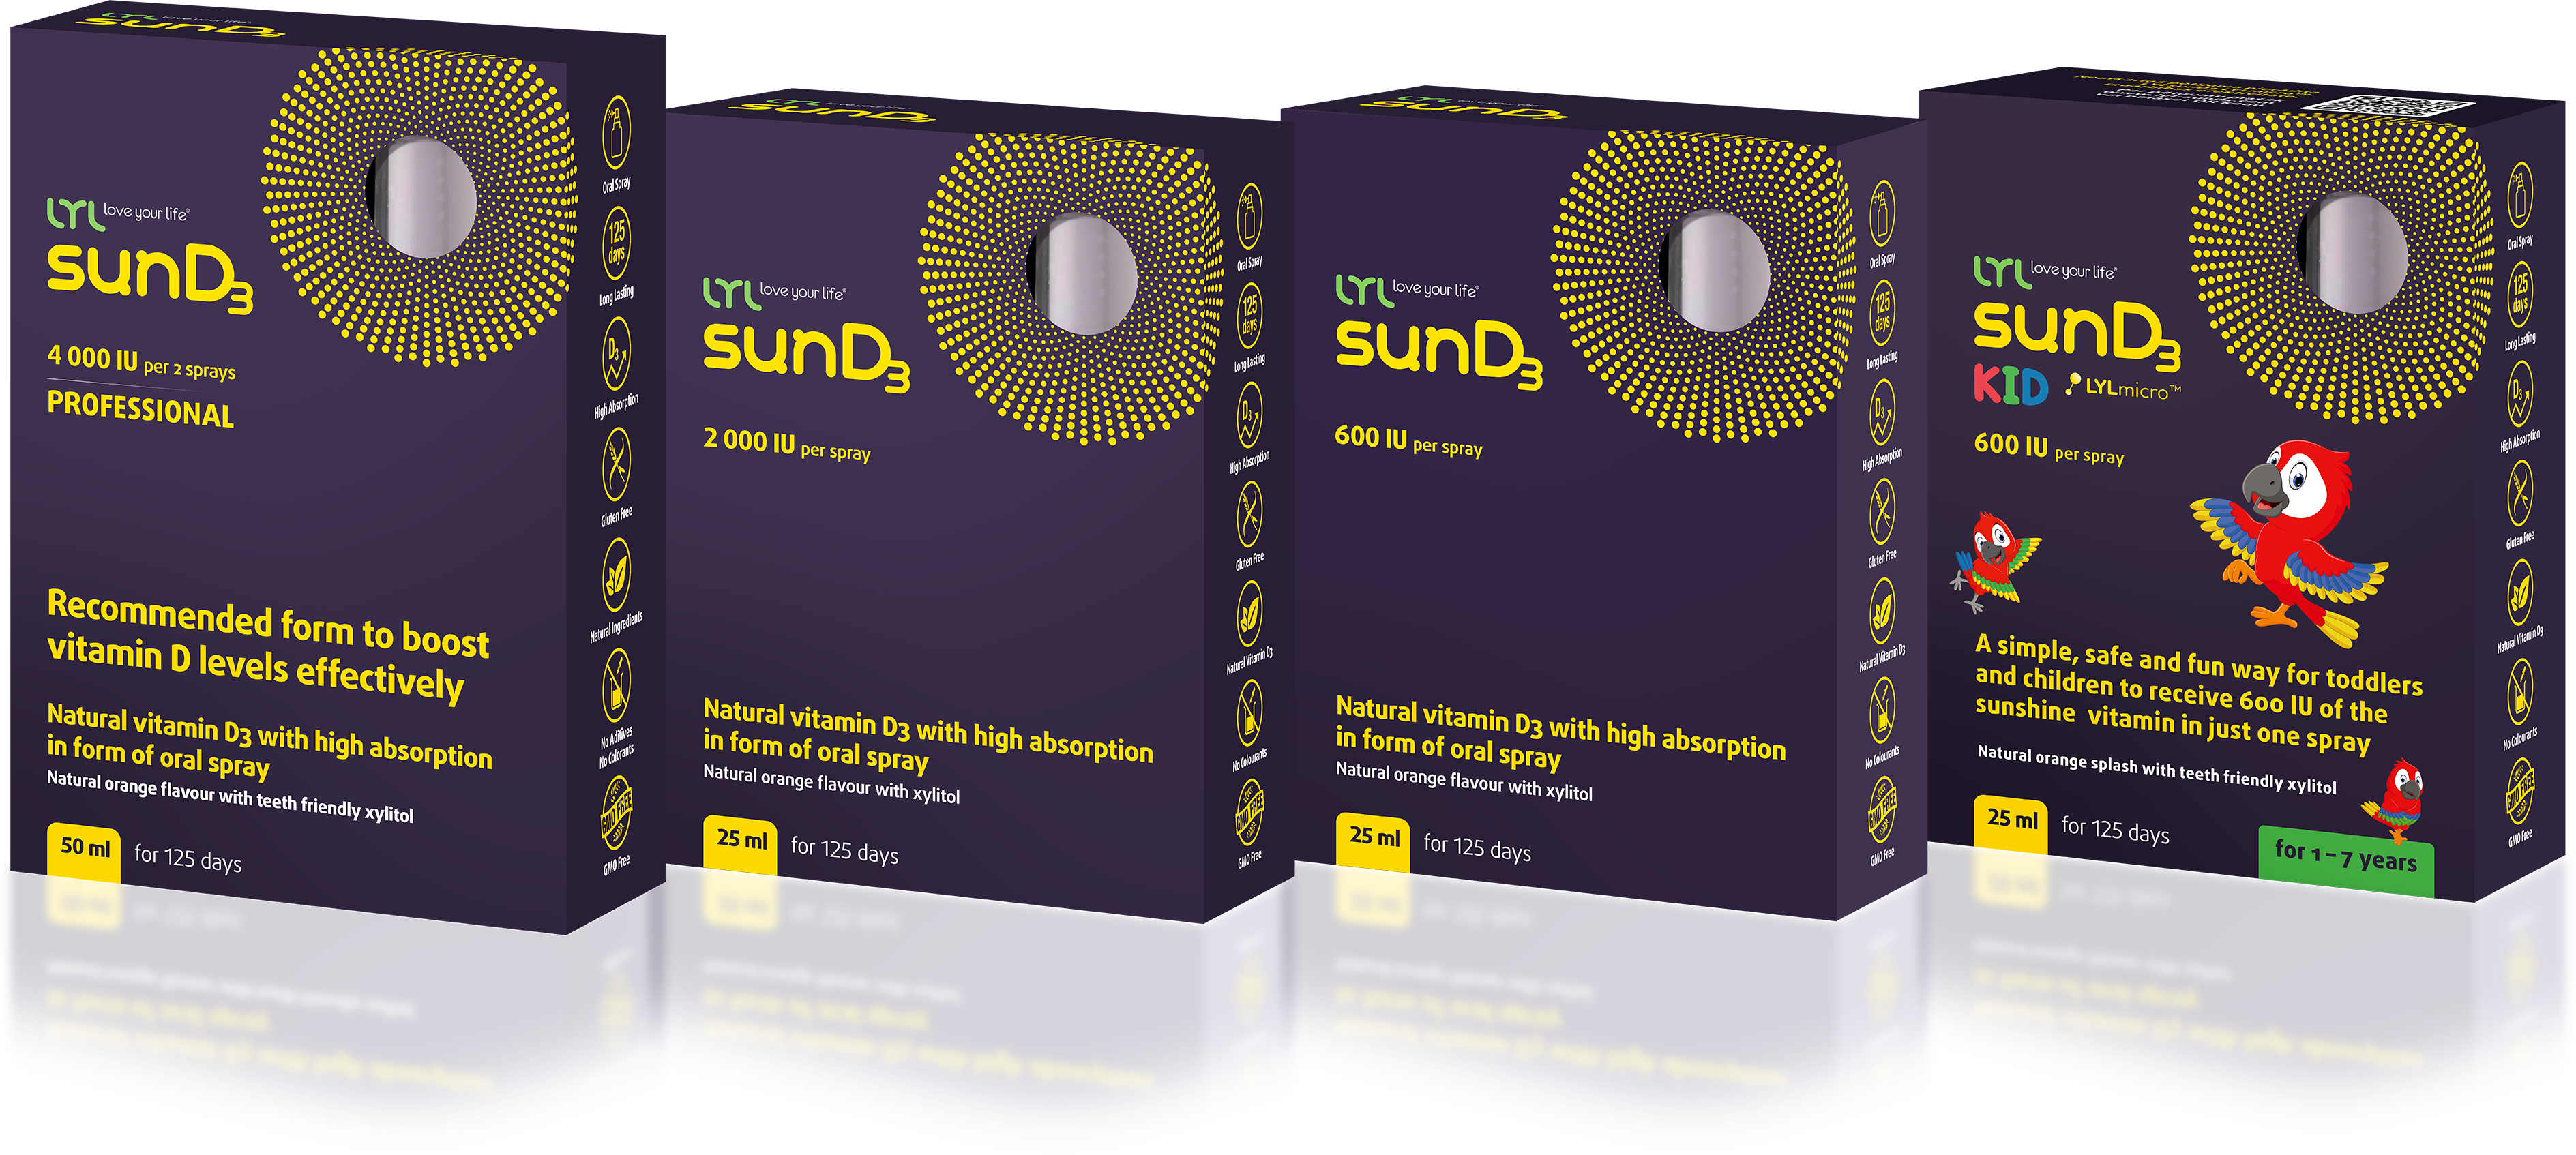 LYL sunD3 (high absorption Vitamin D3 in spray form)